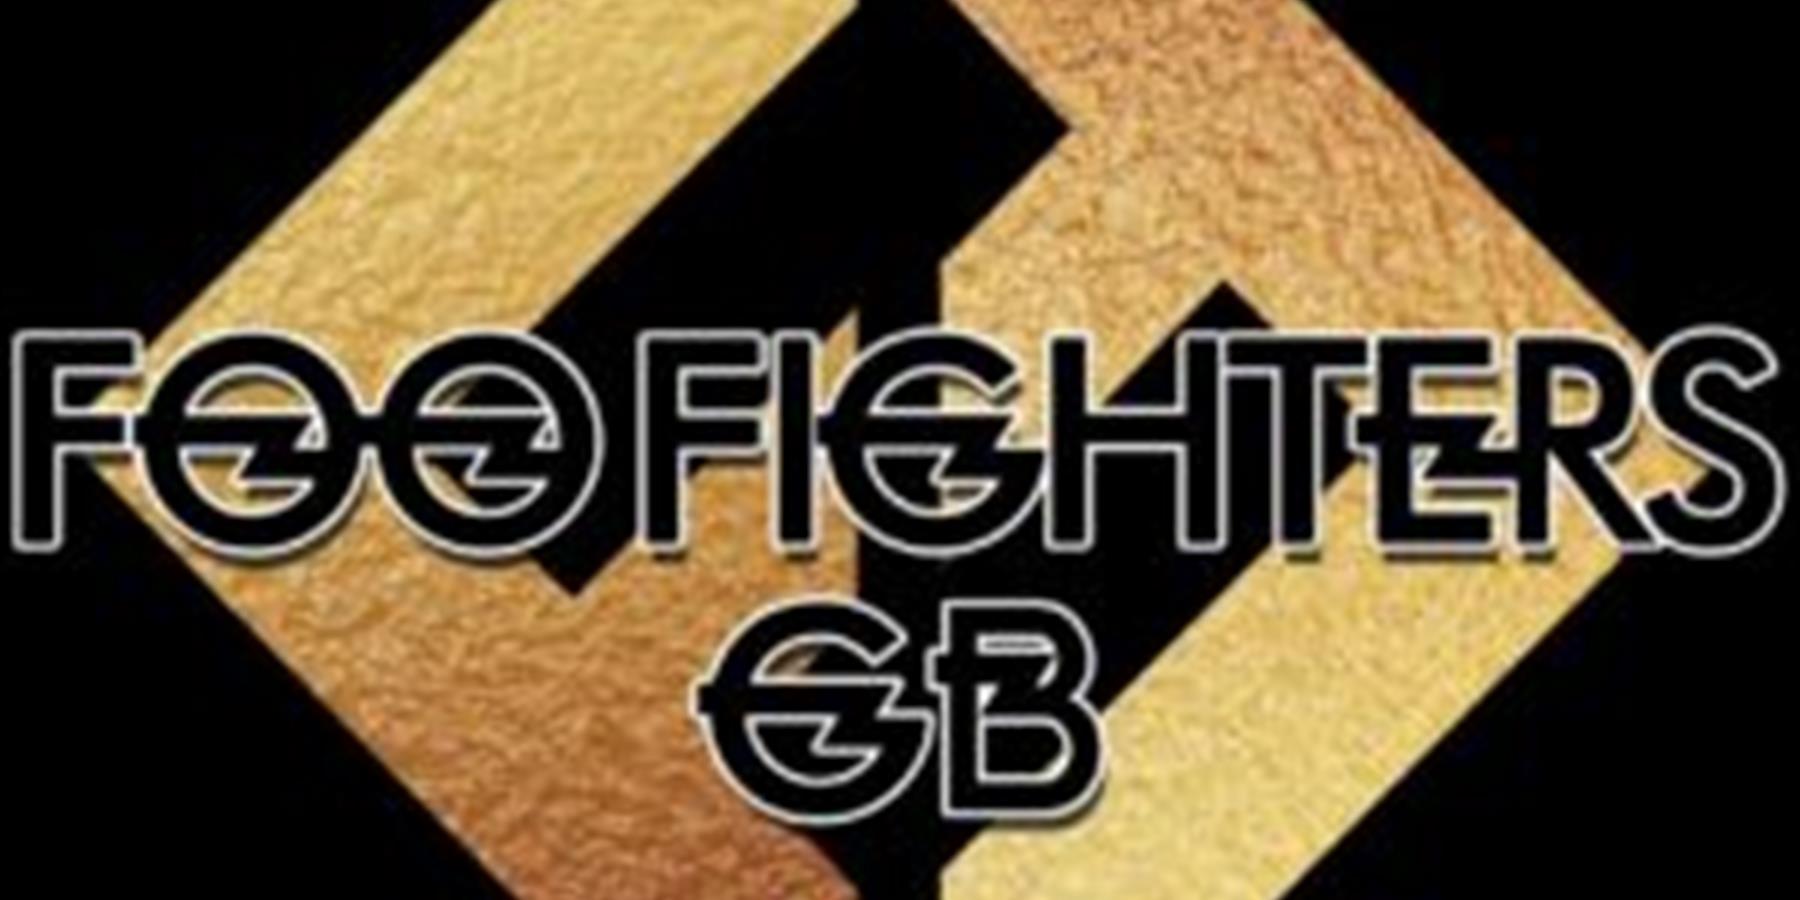 Foo Fighters GB logo